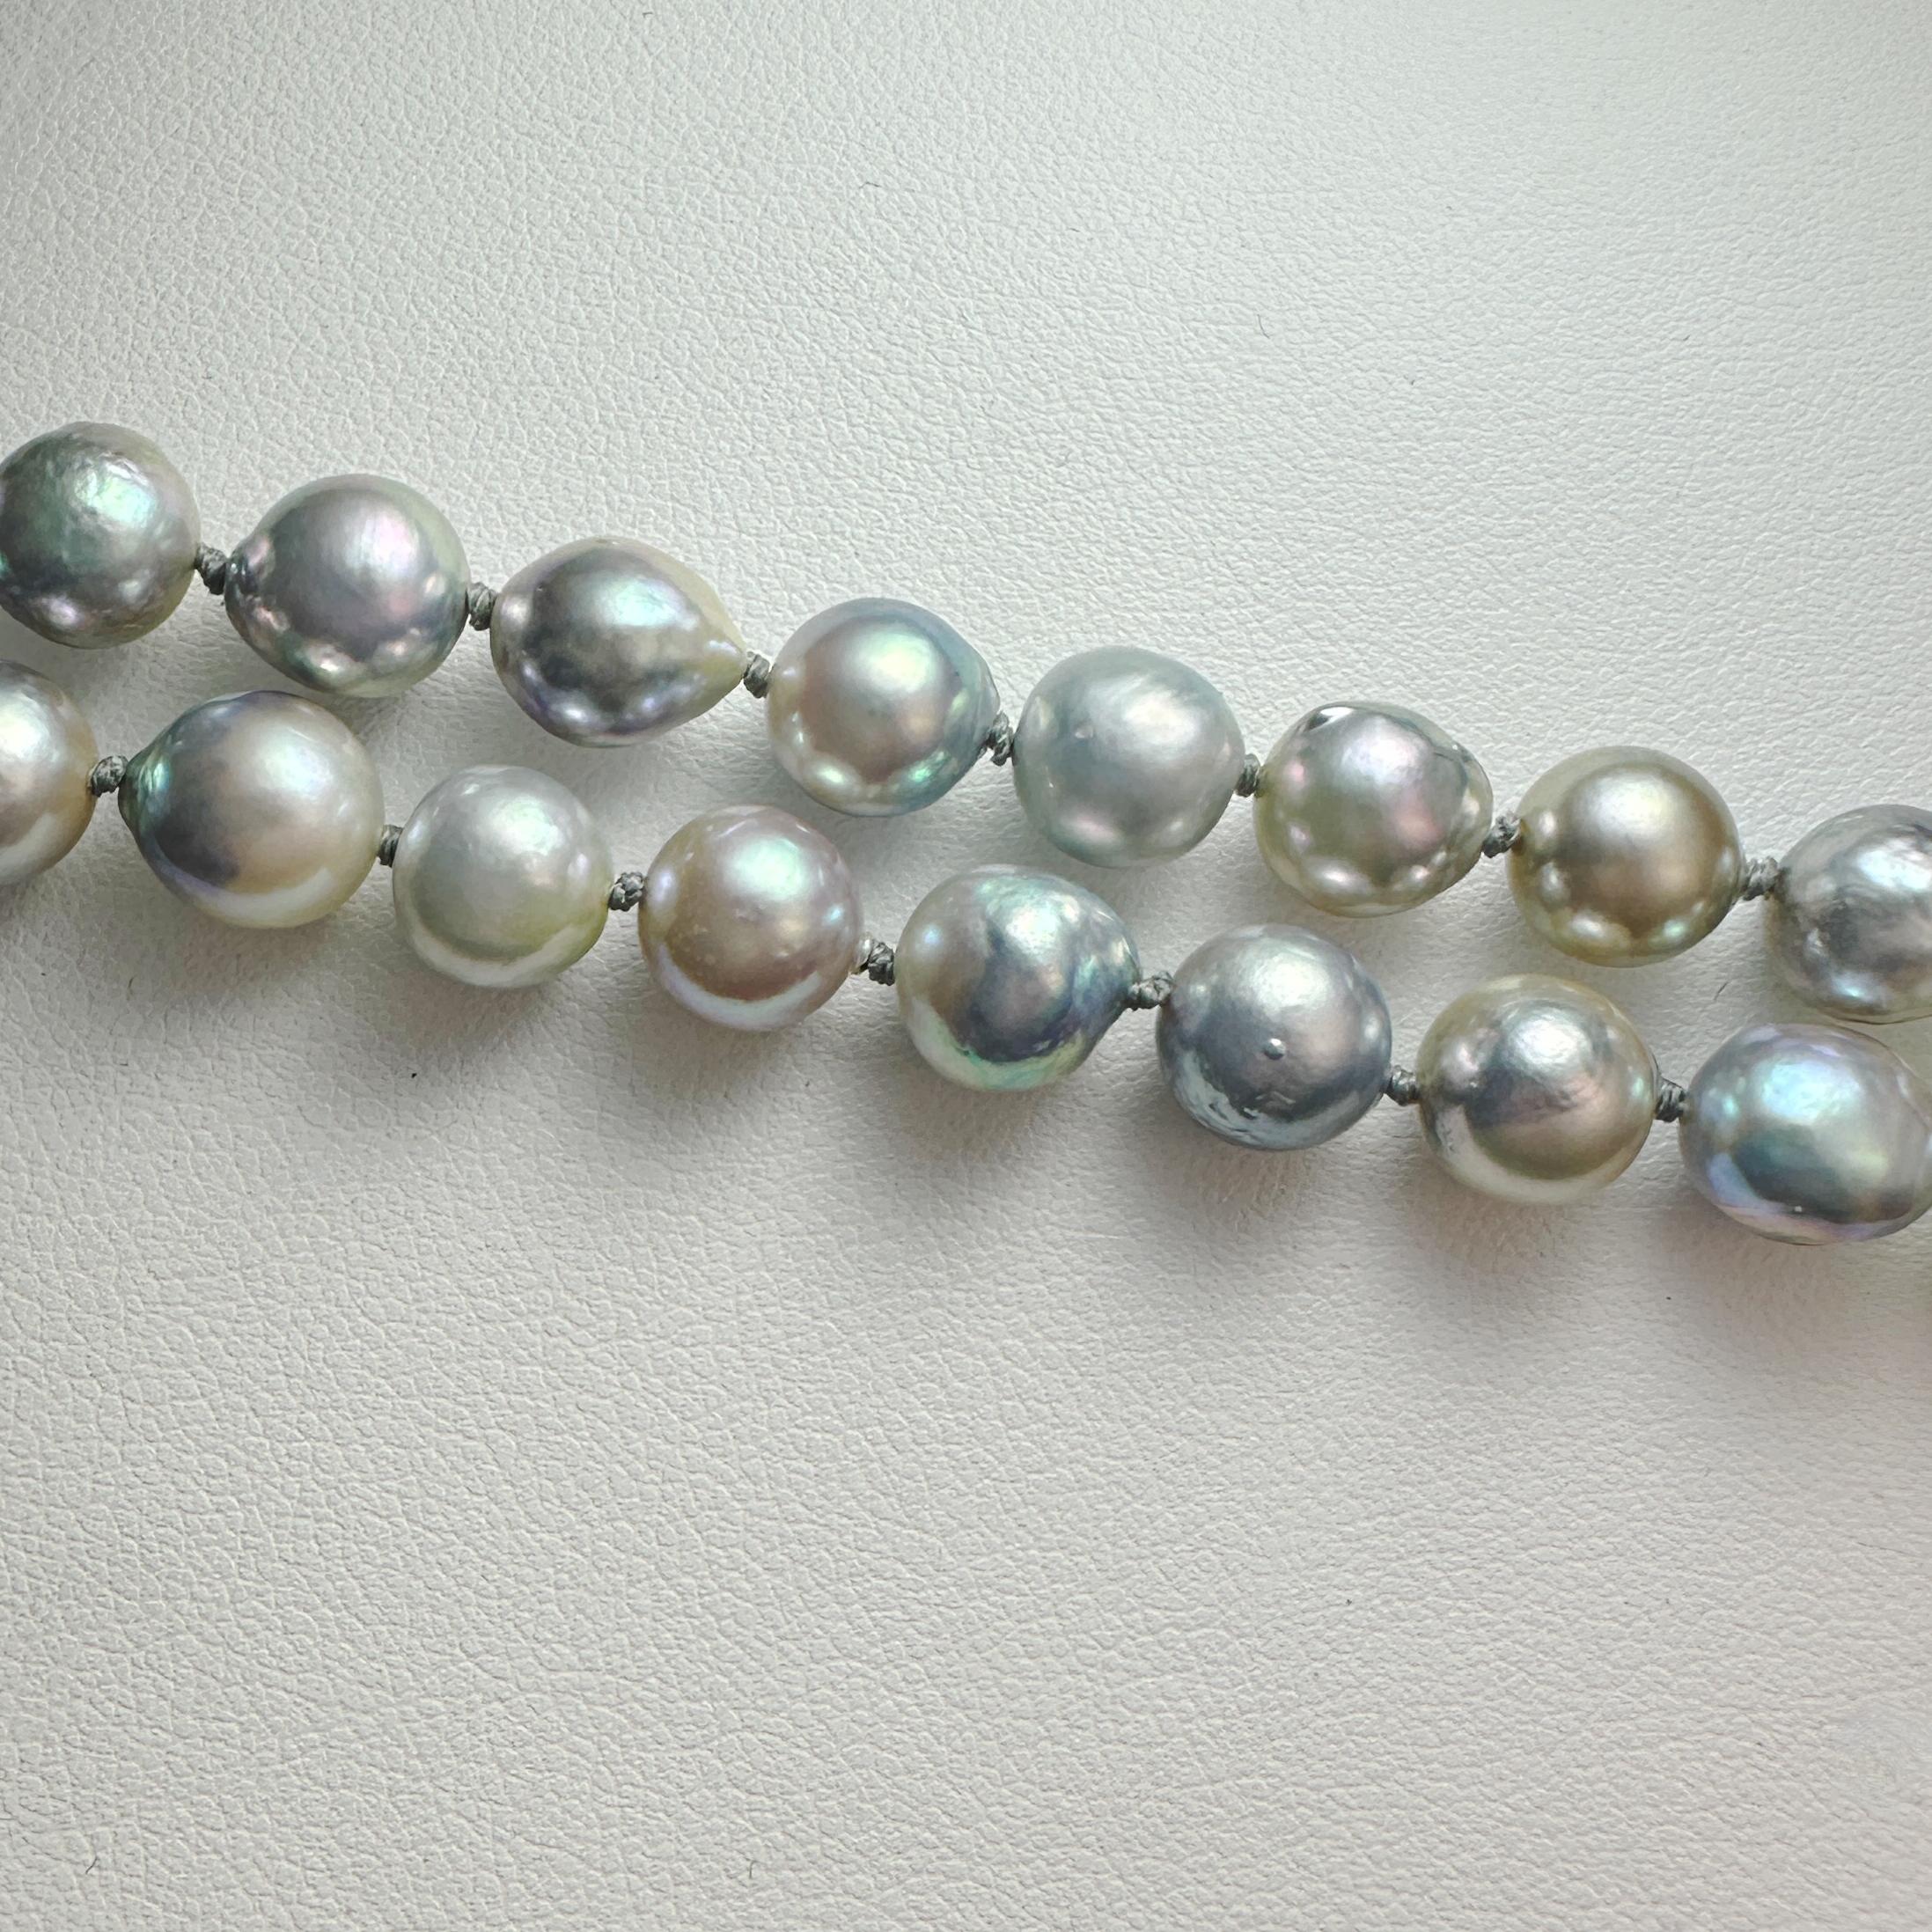 Frosty Baroque Akoya Pearls in 17